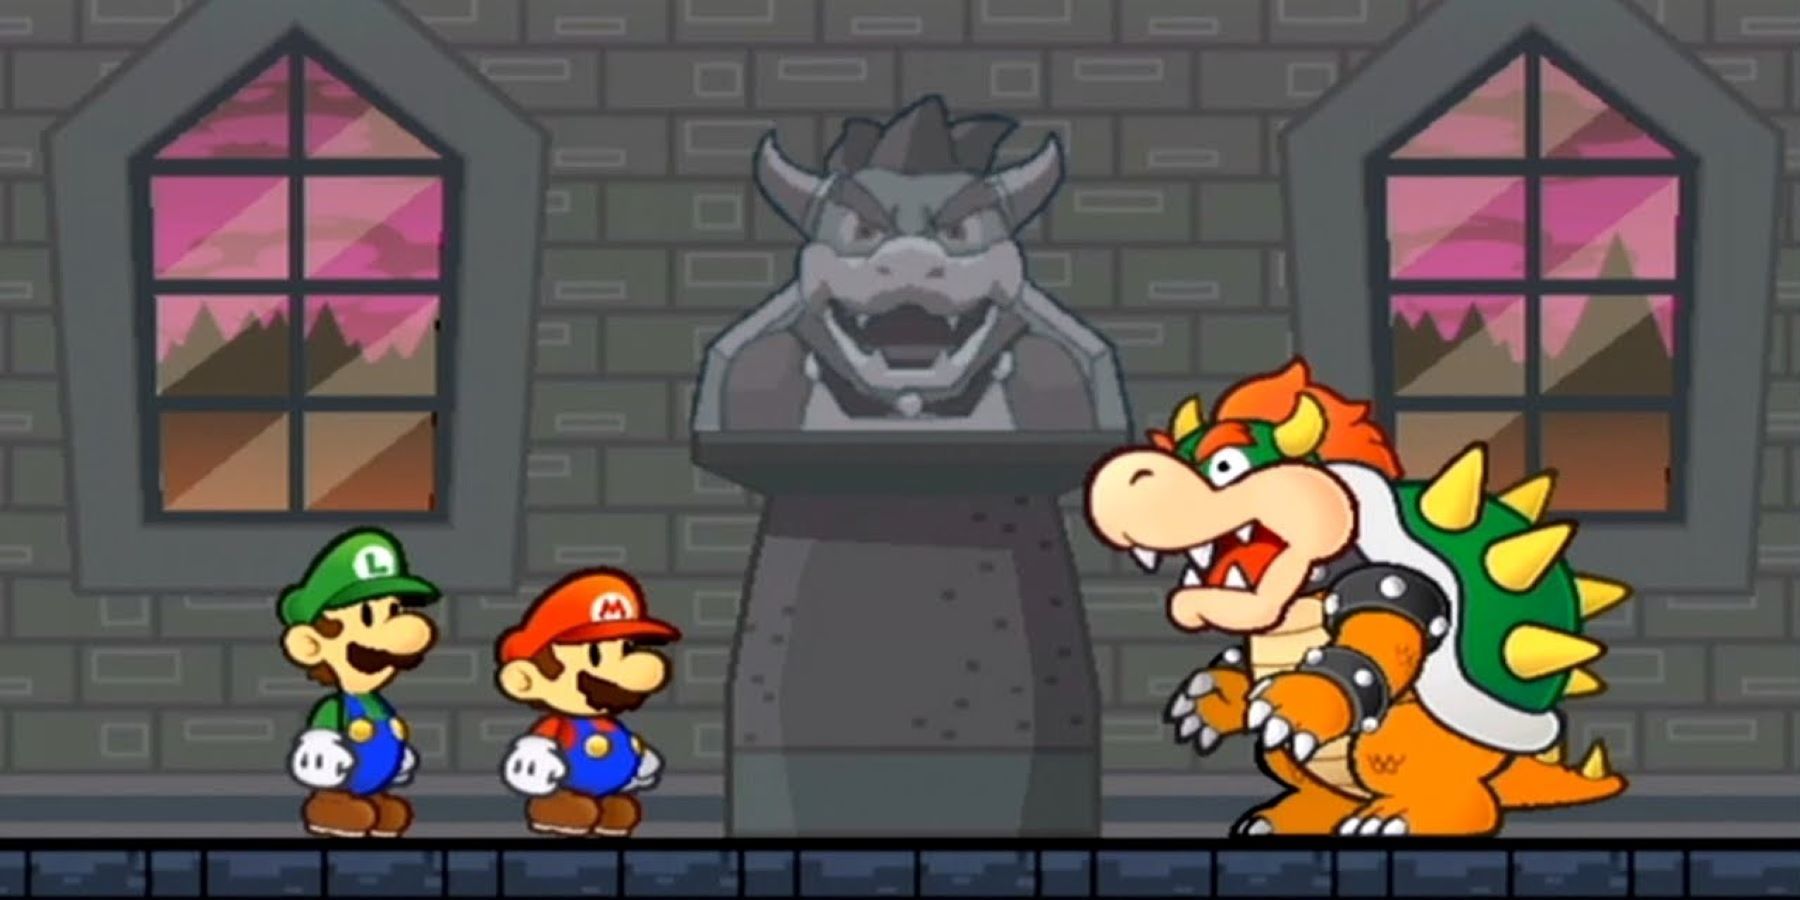 Mario, Luigi, and Bowser in Bowser's Castle during the Super Paper Mario intro cutscene